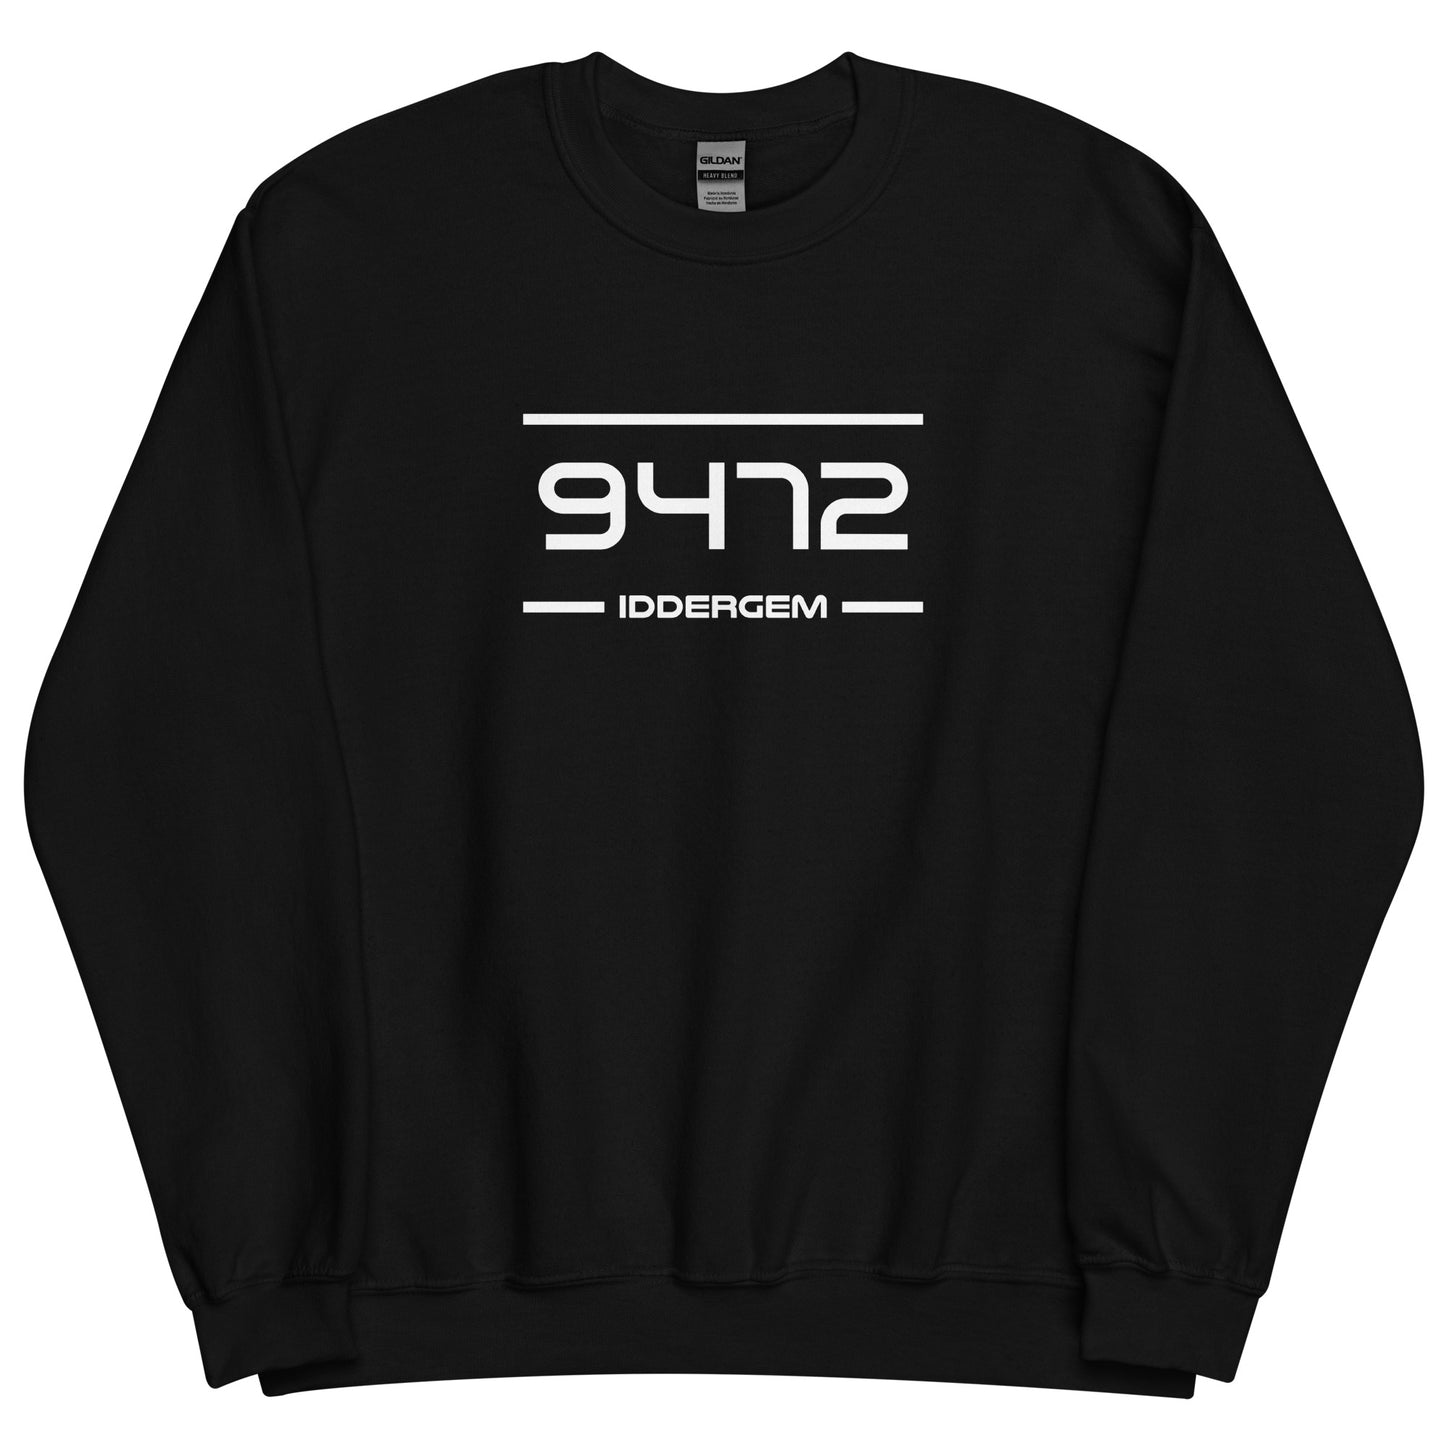 Sweater - 9472 - Iddergem (M/V)